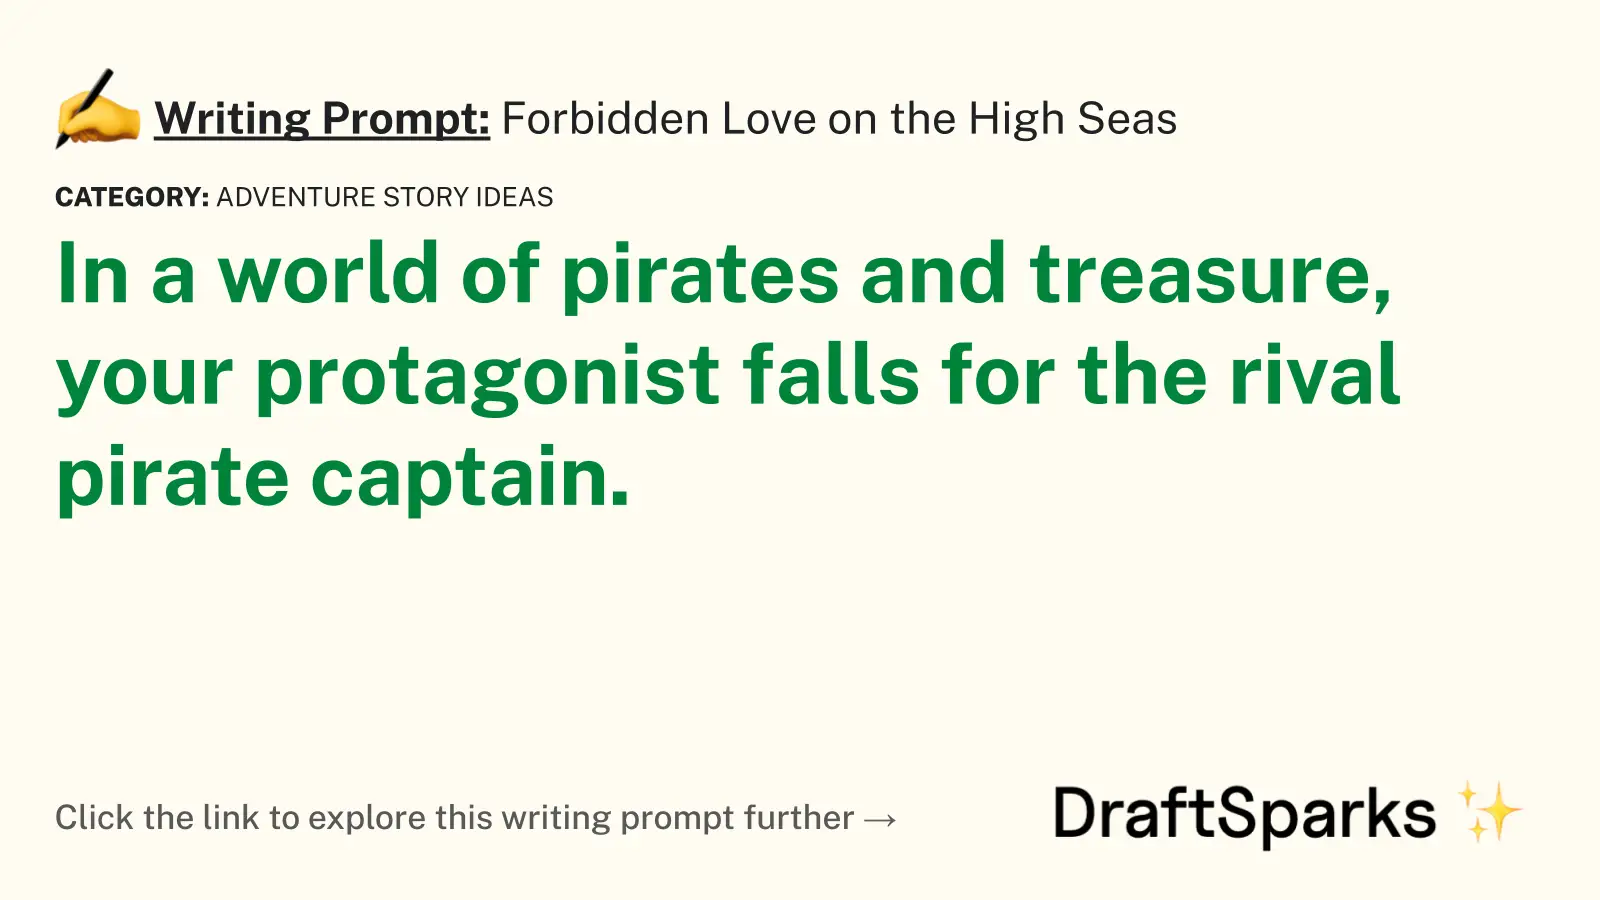 Forbidden Love on the High Seas